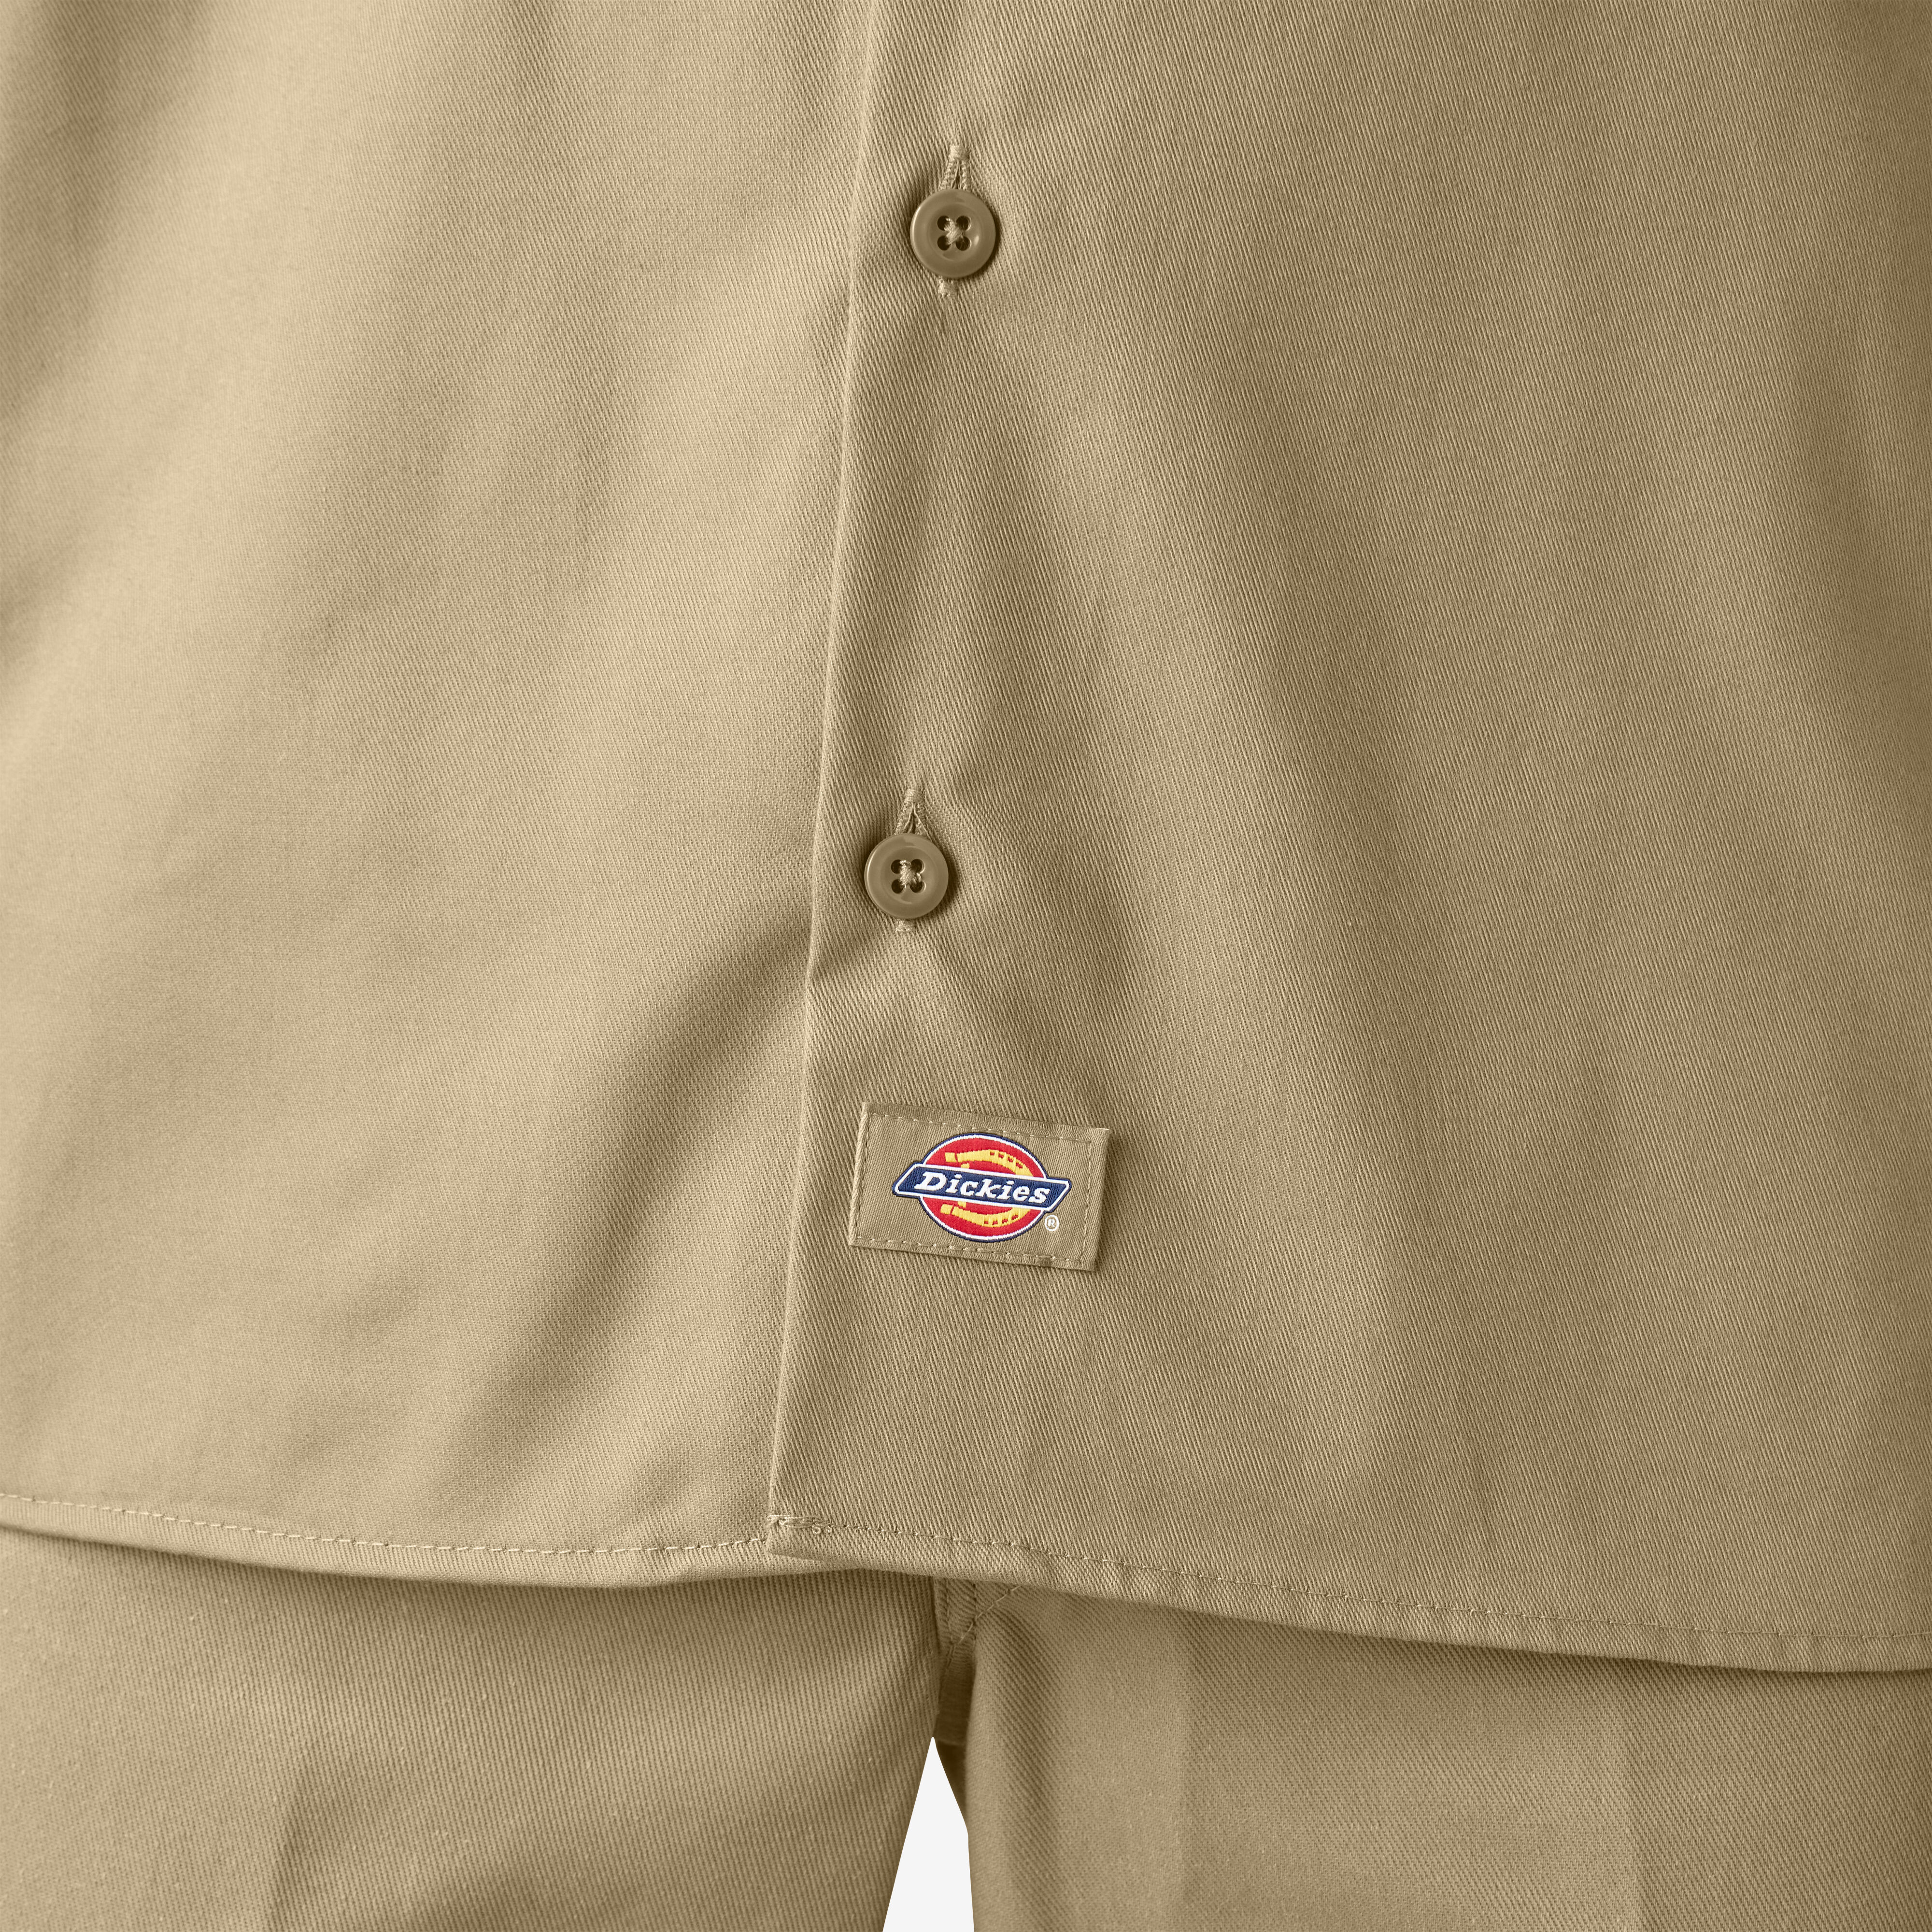 Short Sleeve Work Shirt | Men's Shirts | Dickies - Dickies US